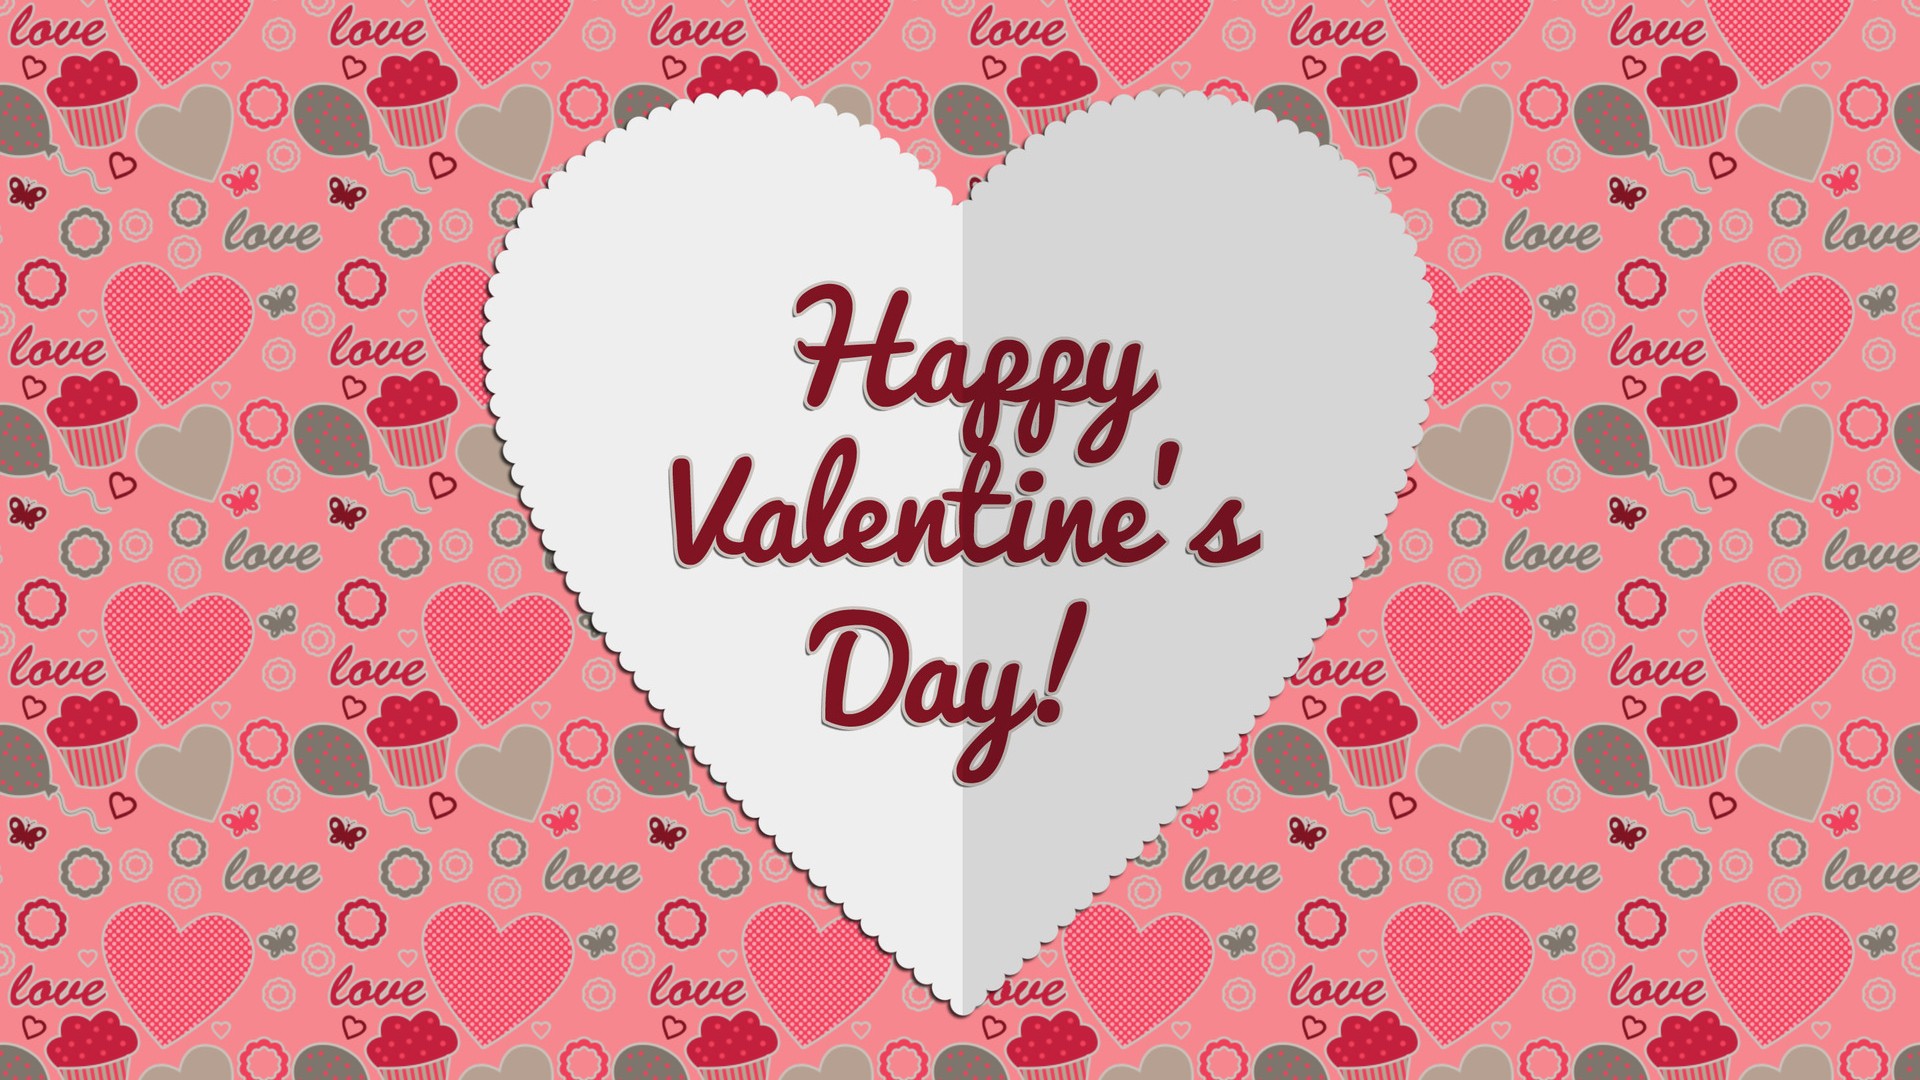 valentines day live wallpaper,heart,pink,love,valentine's day,text